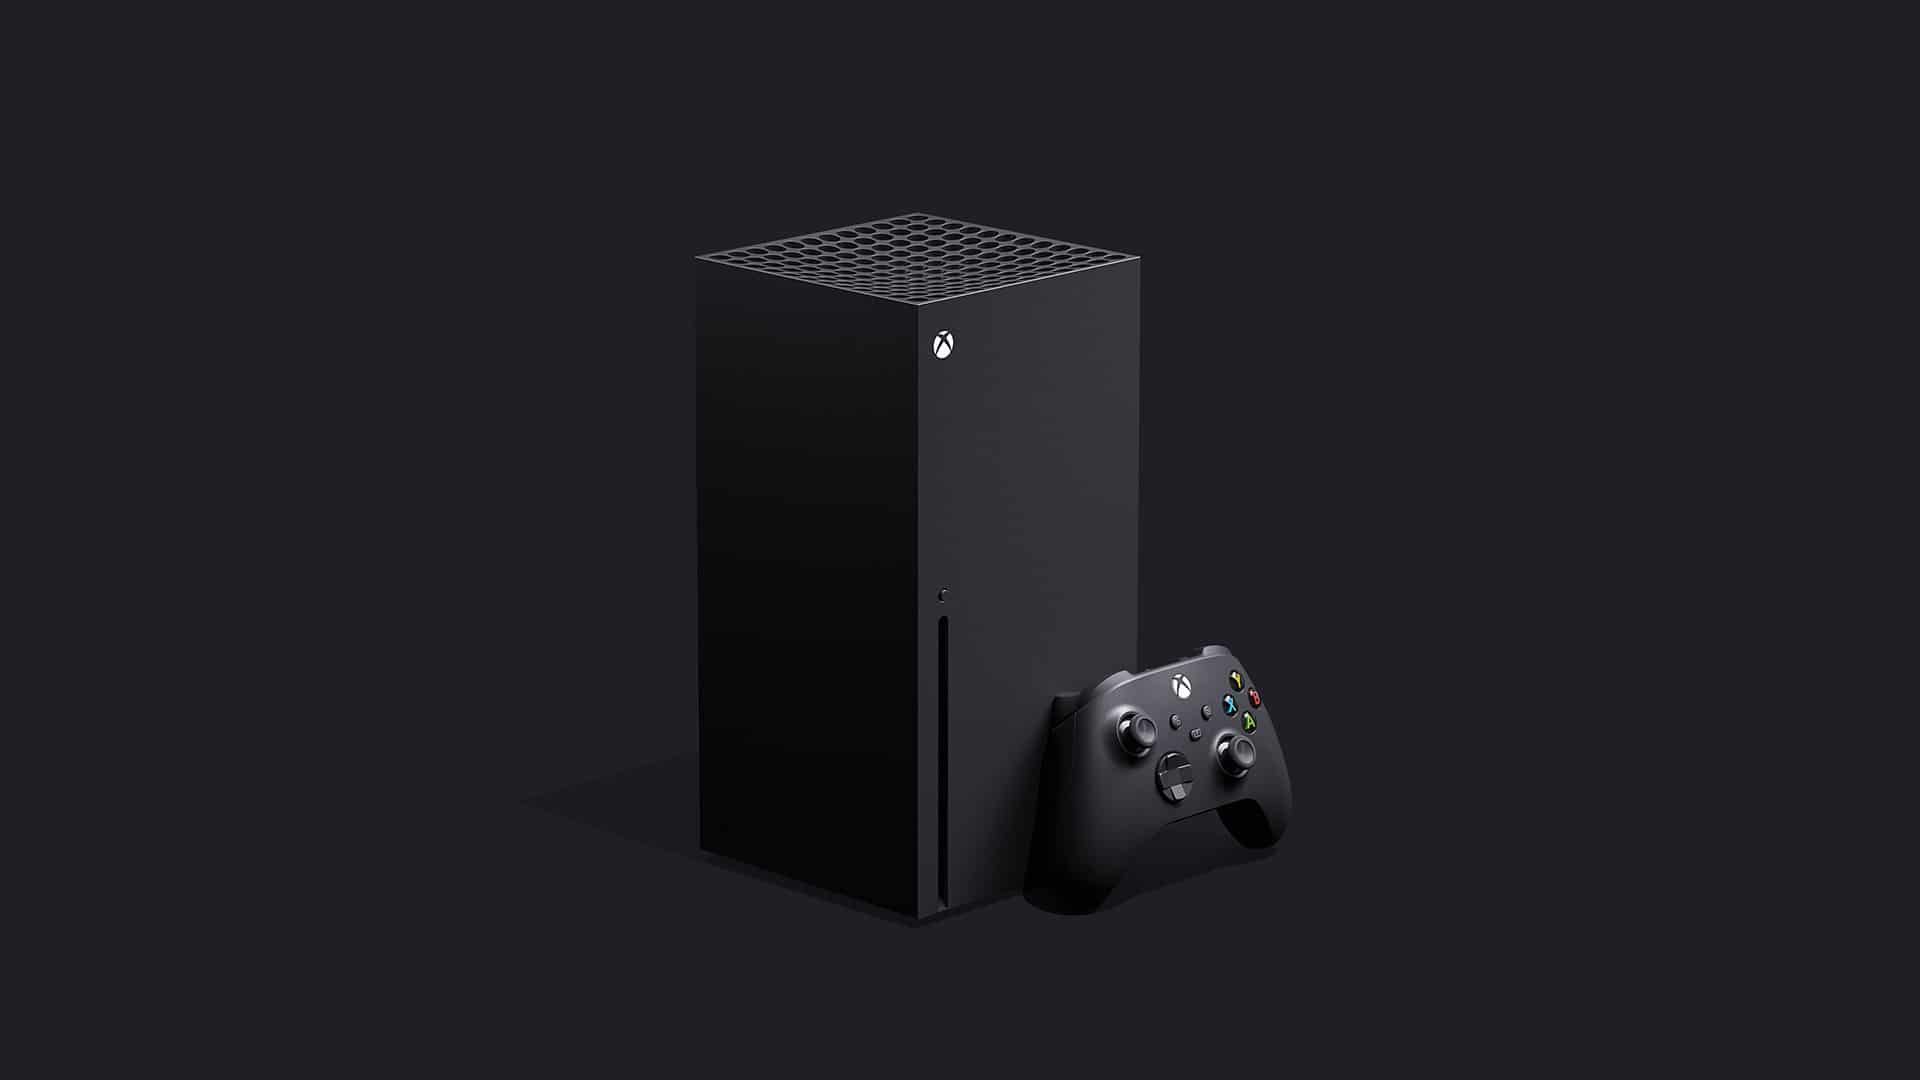 Disturb Miner Wording Amazon Delaying Xbox Series X Orders